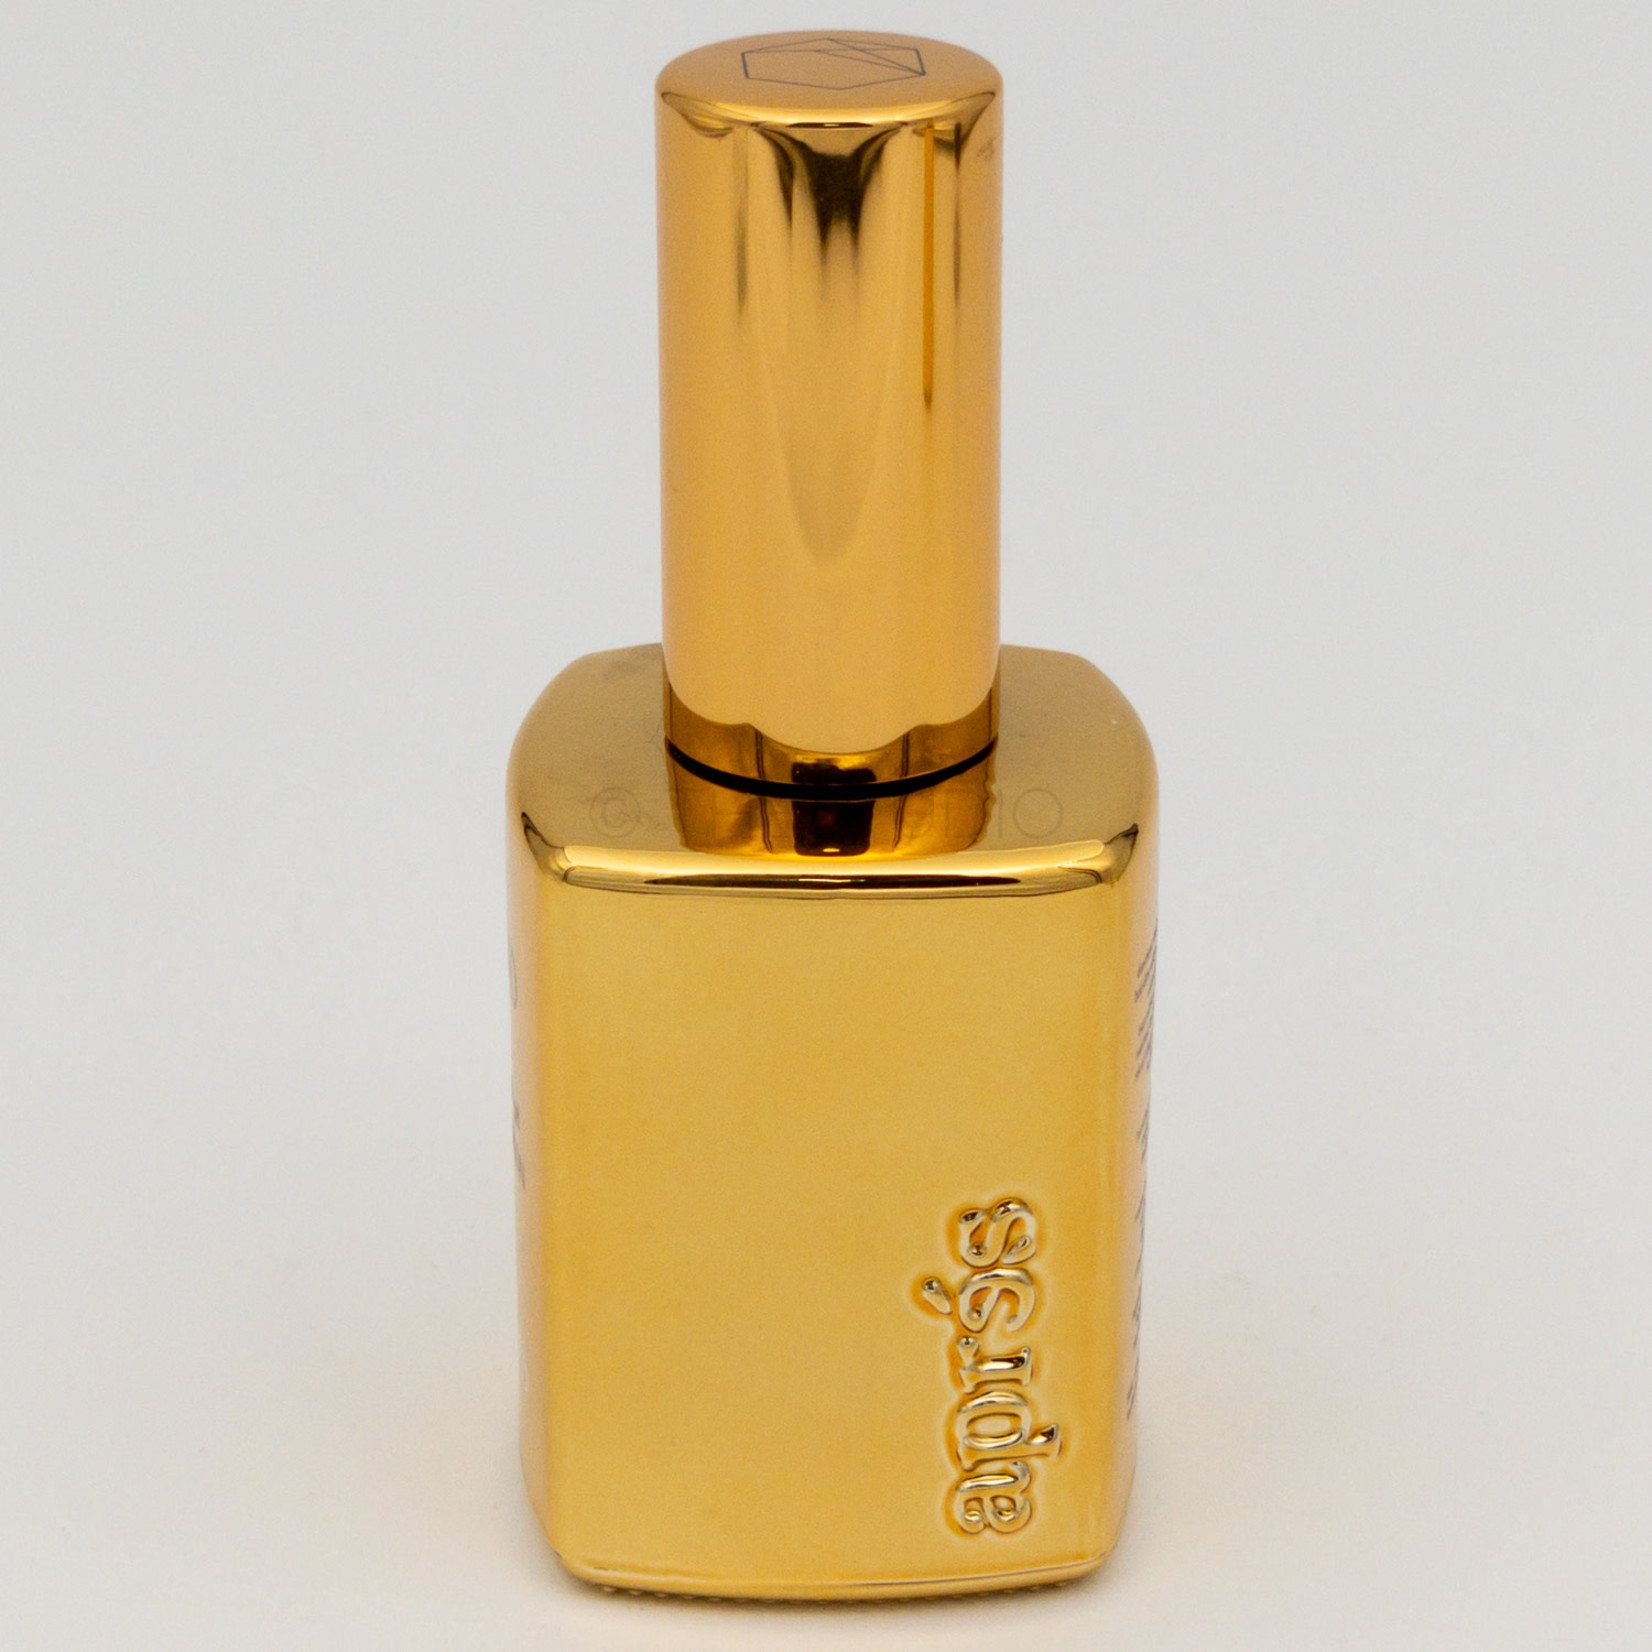 Aprés Extend Gel Gold Bottle Edition - Gel-X Tips Adhesive (15 ml)